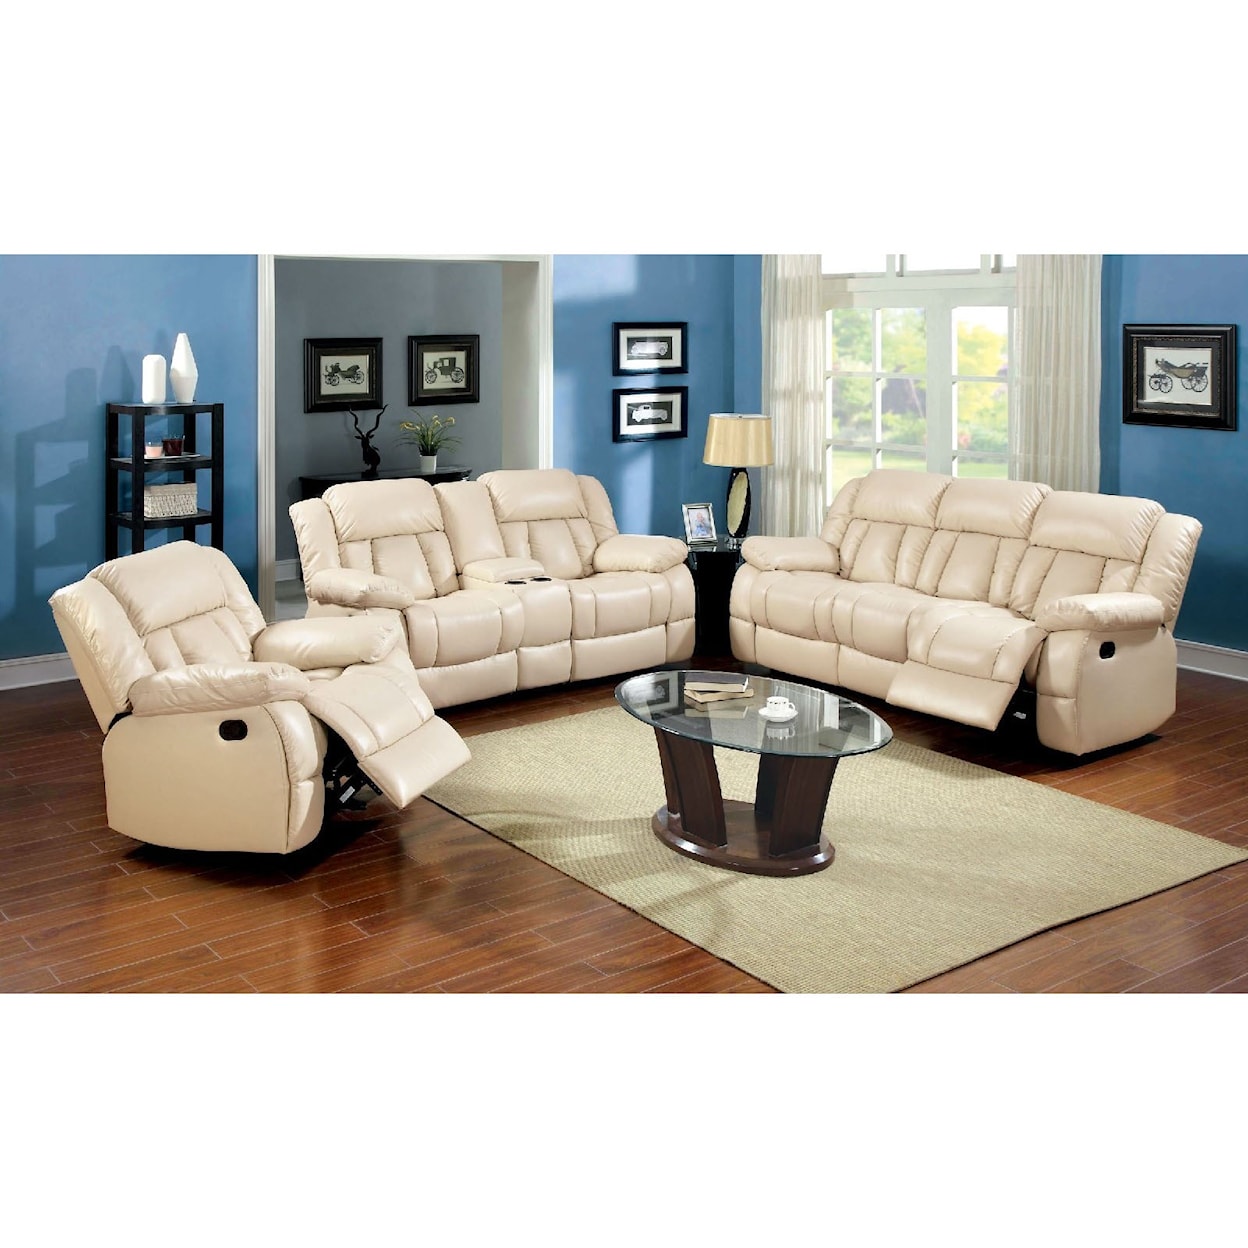 Furniture of America Barbado Reclining Living Room Group